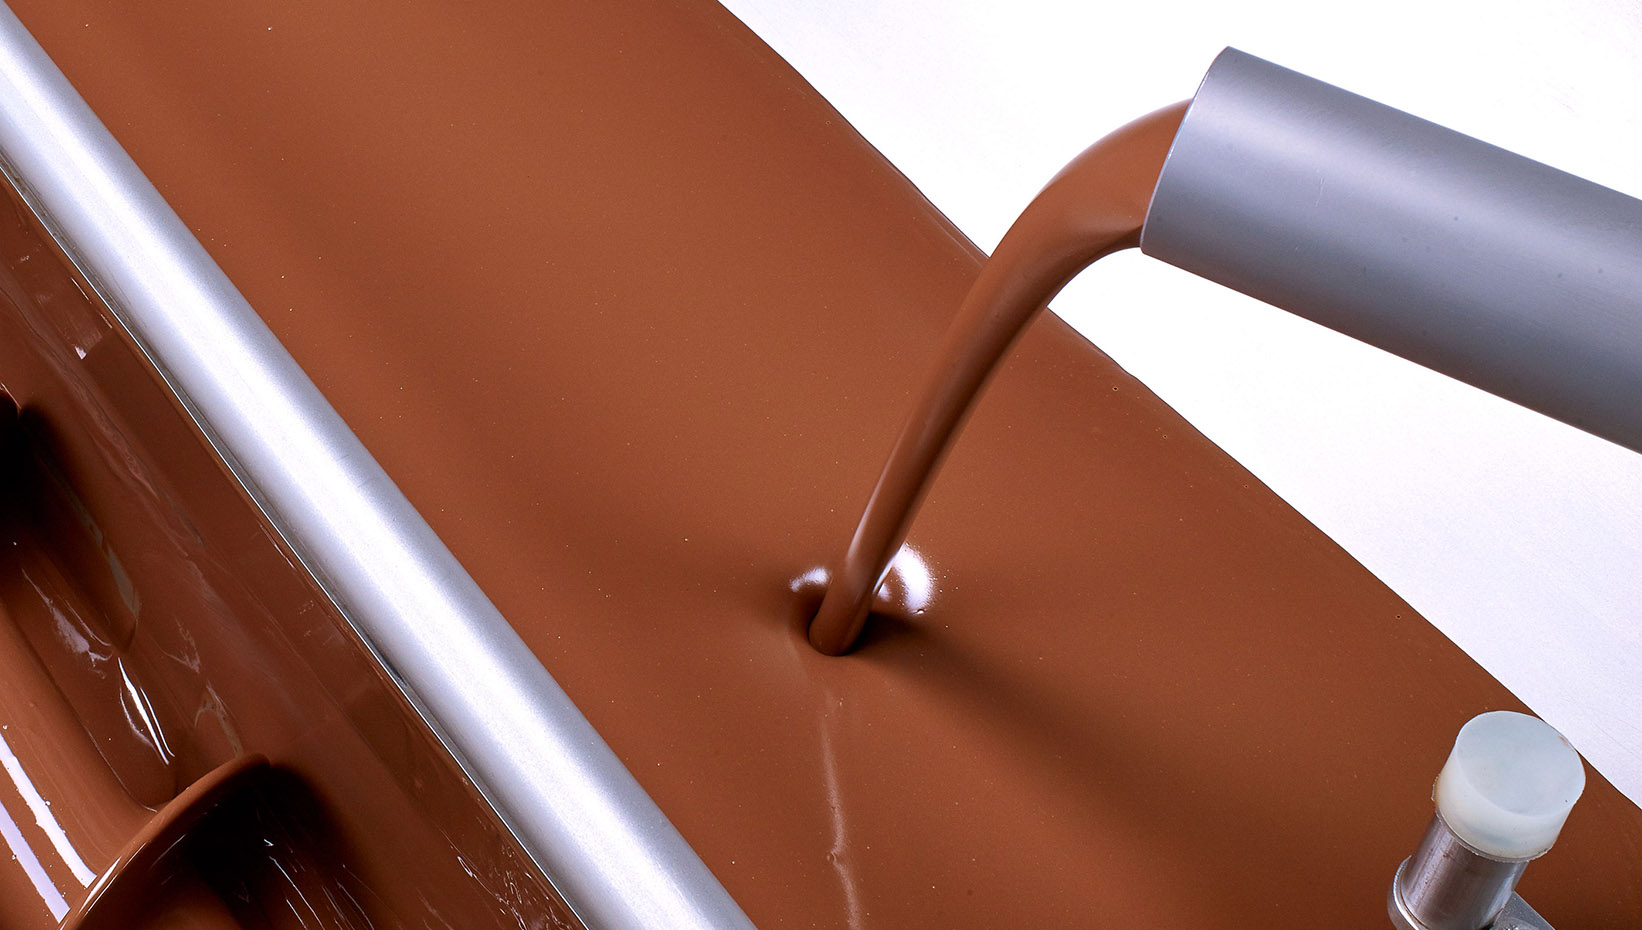 Processing of fluid chocolate.